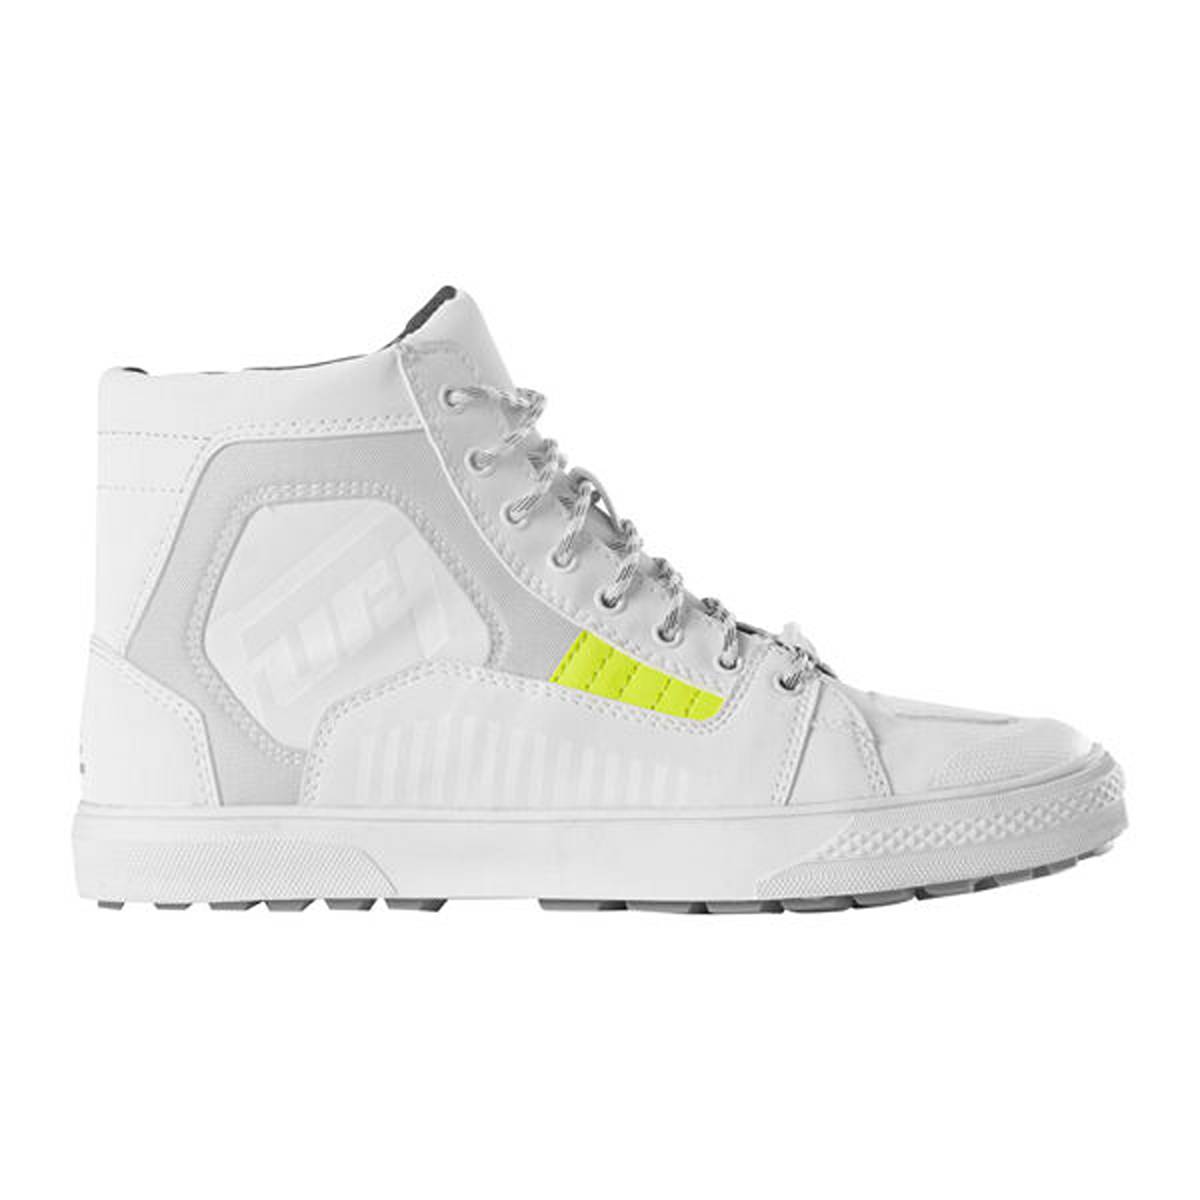 Image of Furygan Sacramento D30 Shoes White Grey Size 38 ID 3435980368104